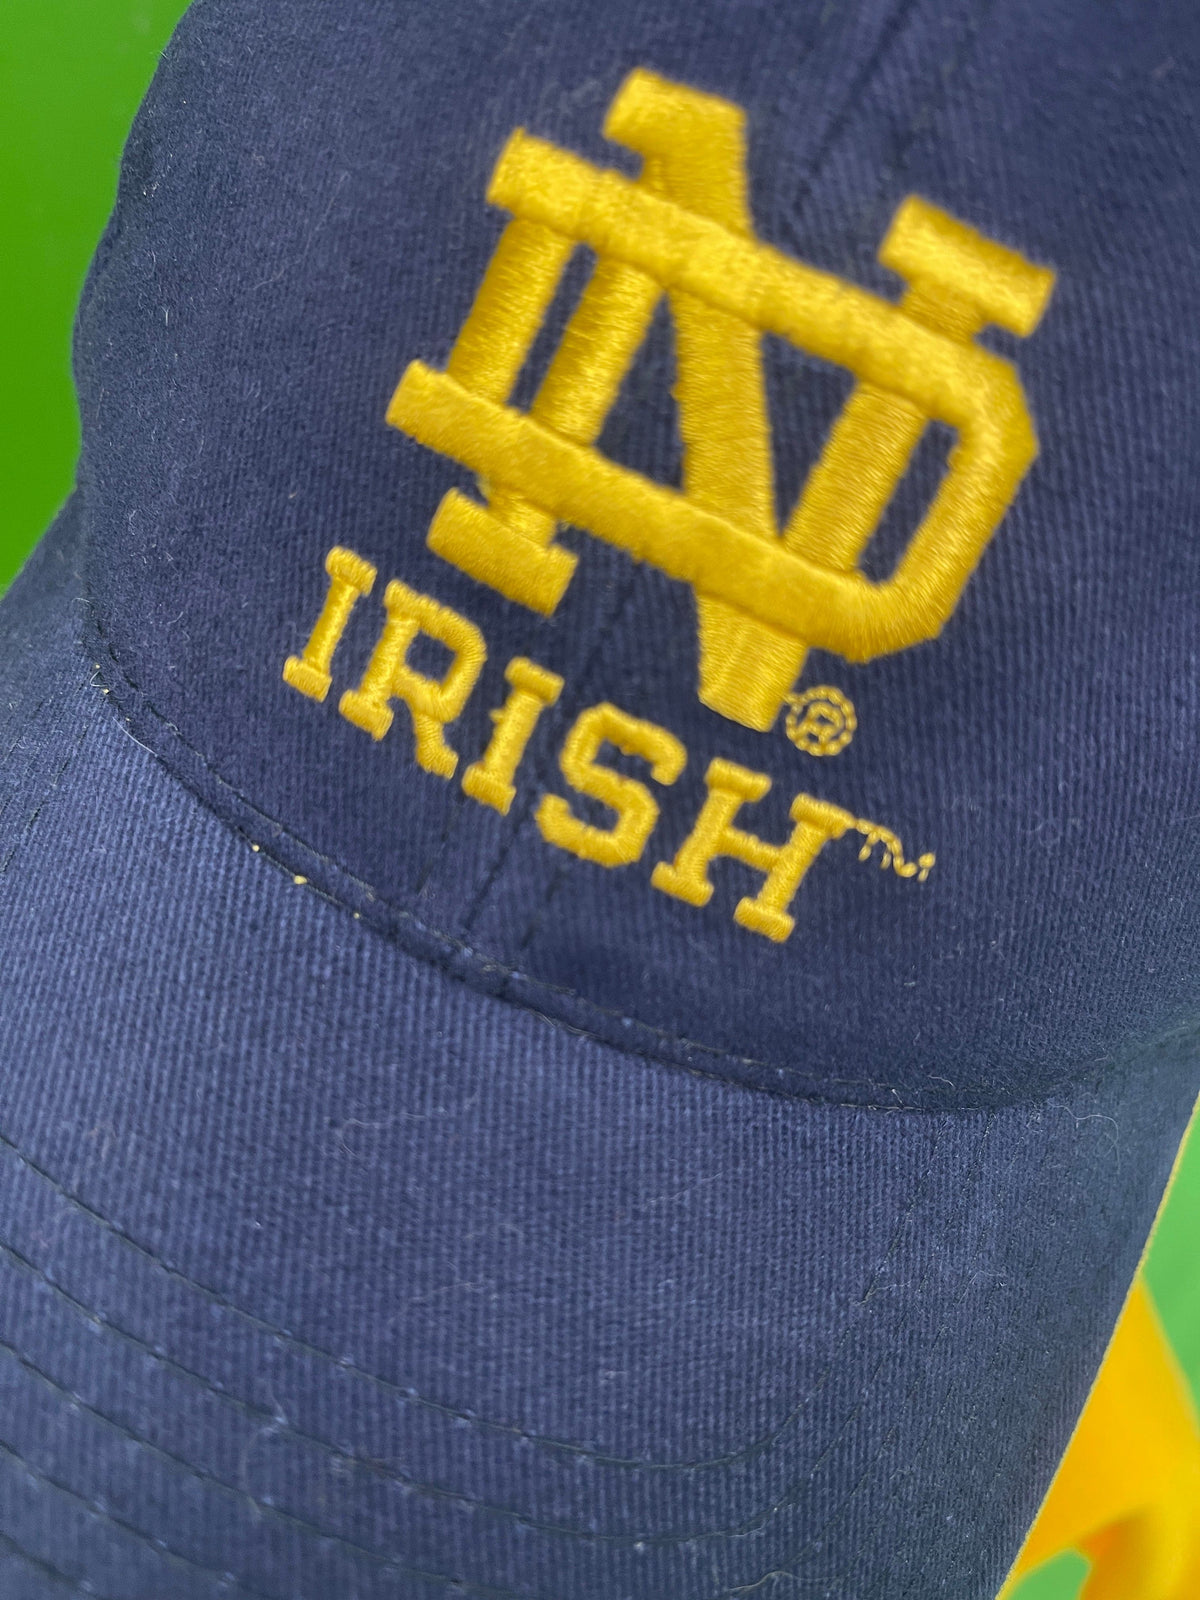 NCAA Notre Dame Fighting Irish Strapback Hat/Cap OSFM